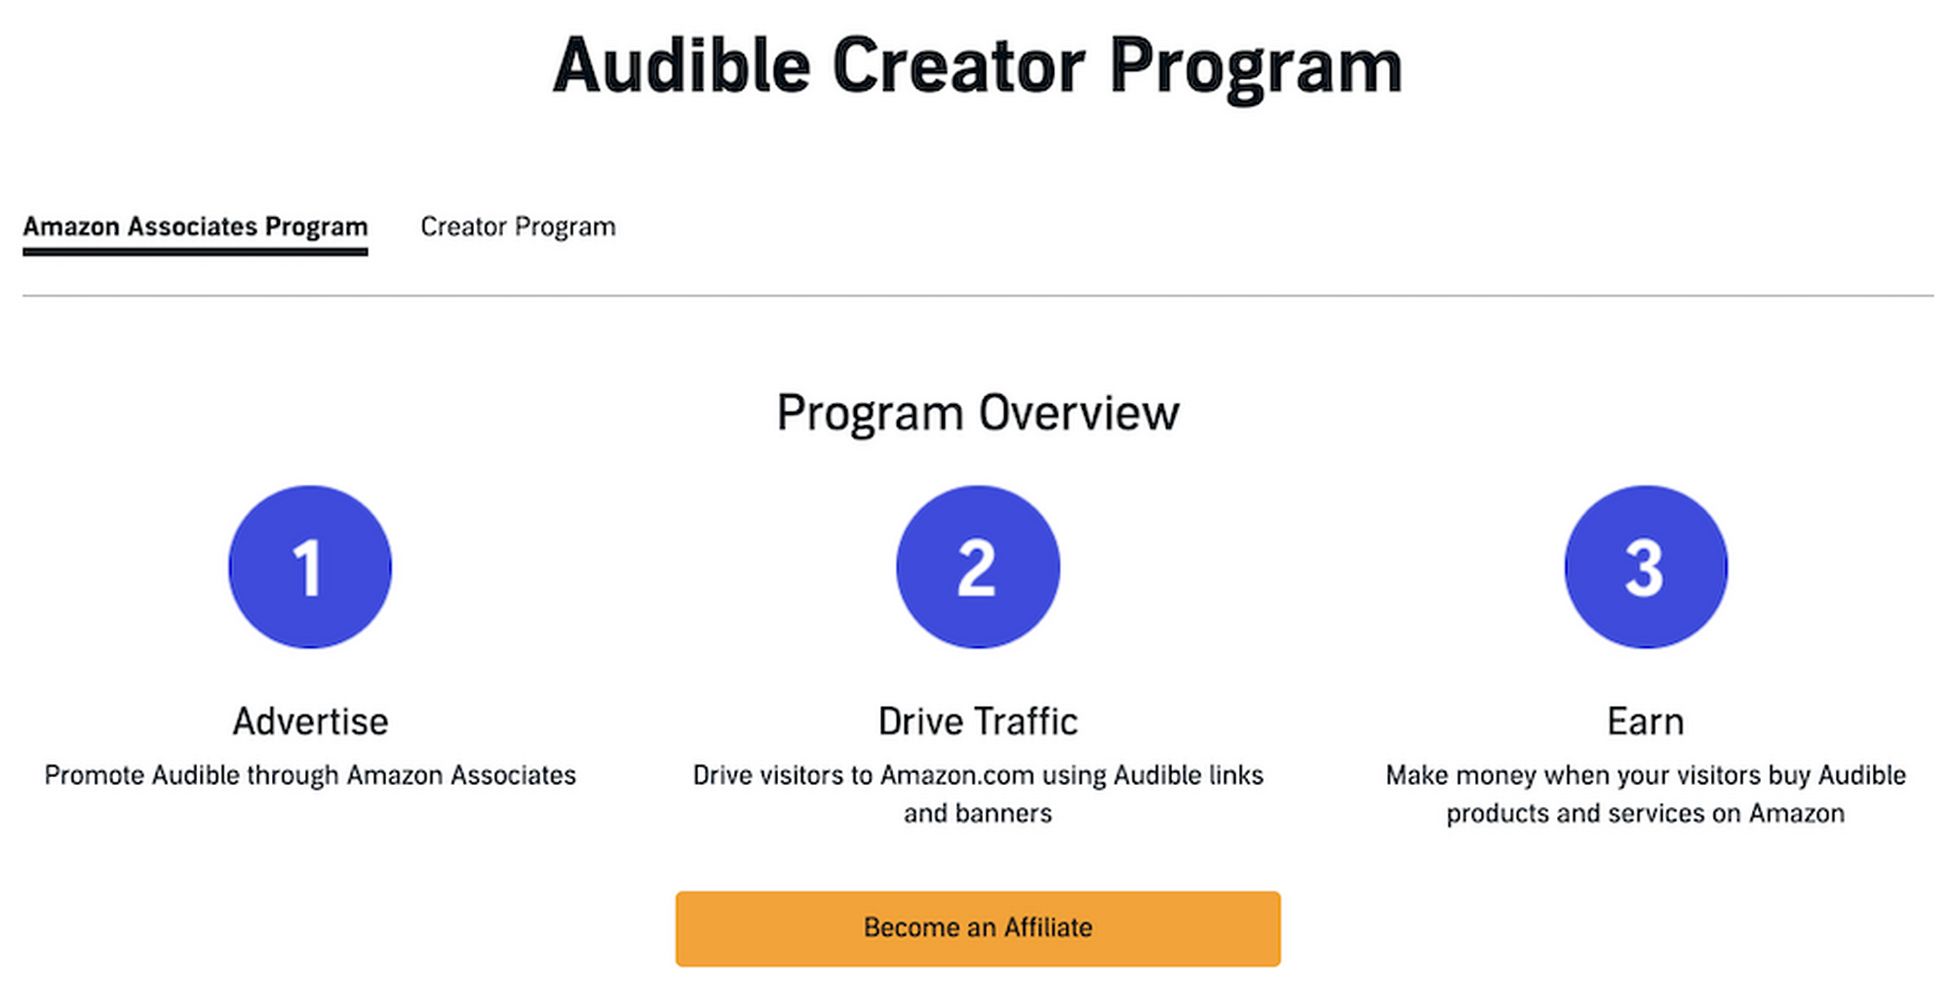 Audible Creator Program